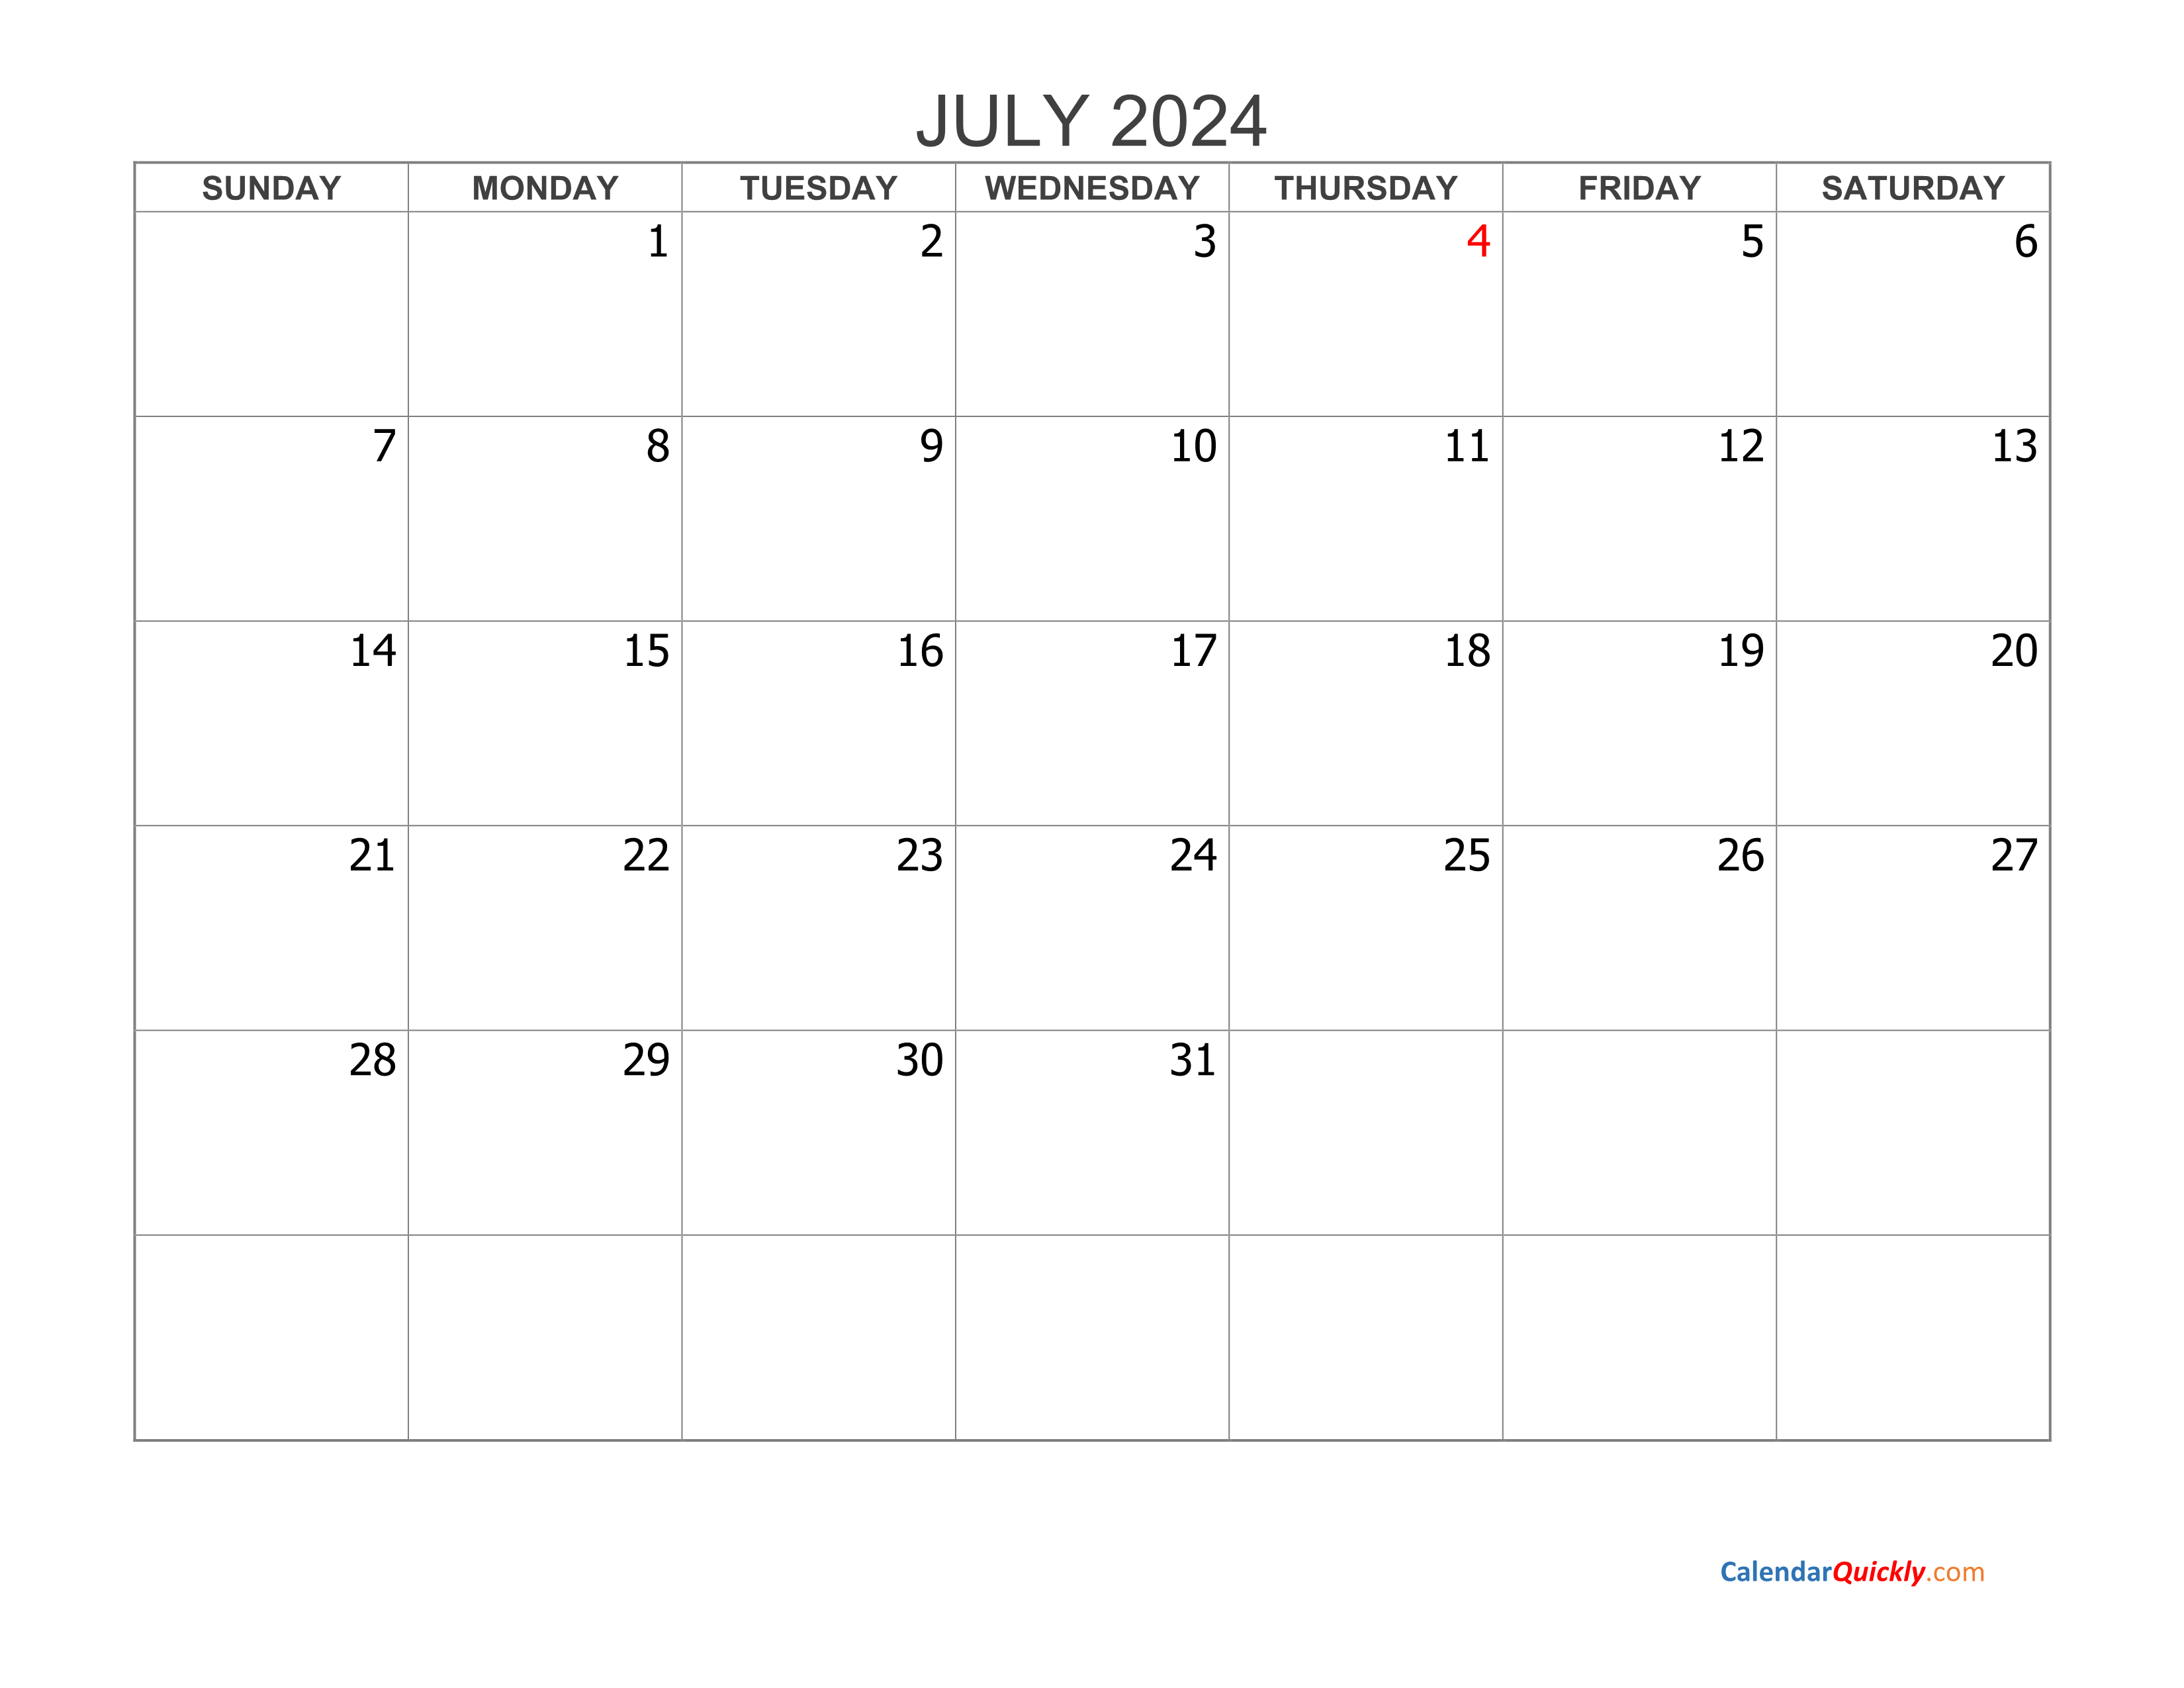 July 2024 Blank Calendar Calendar Quickly